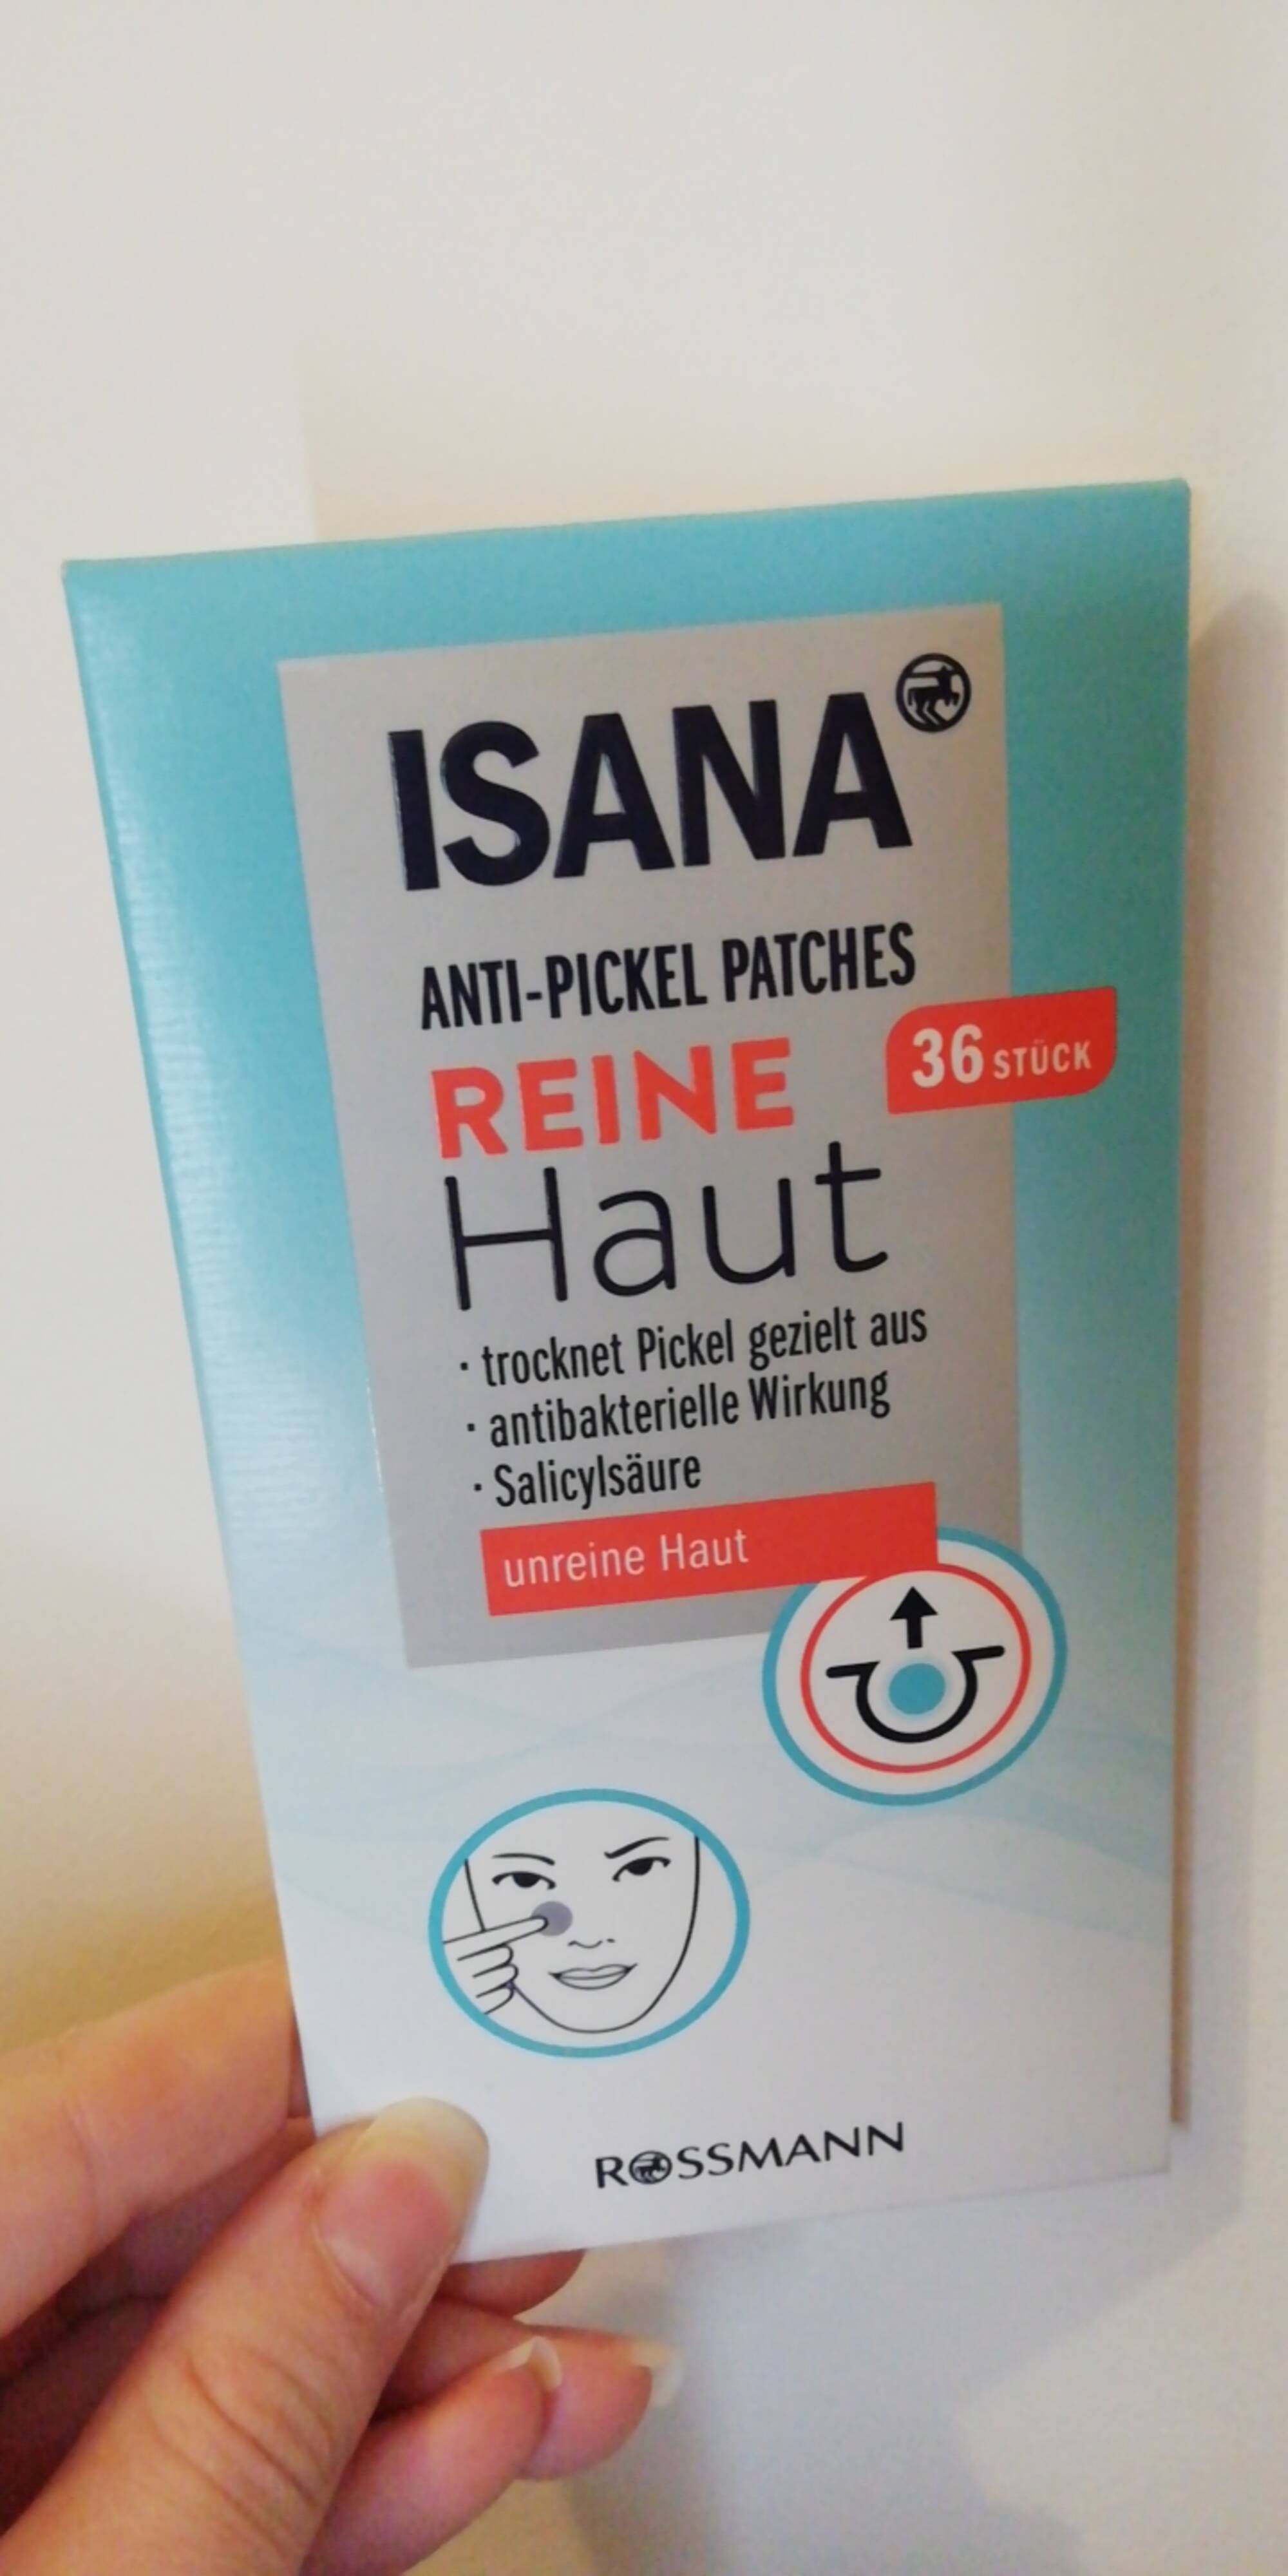 ISANA - Anti-Pickel Patches Reine Haut